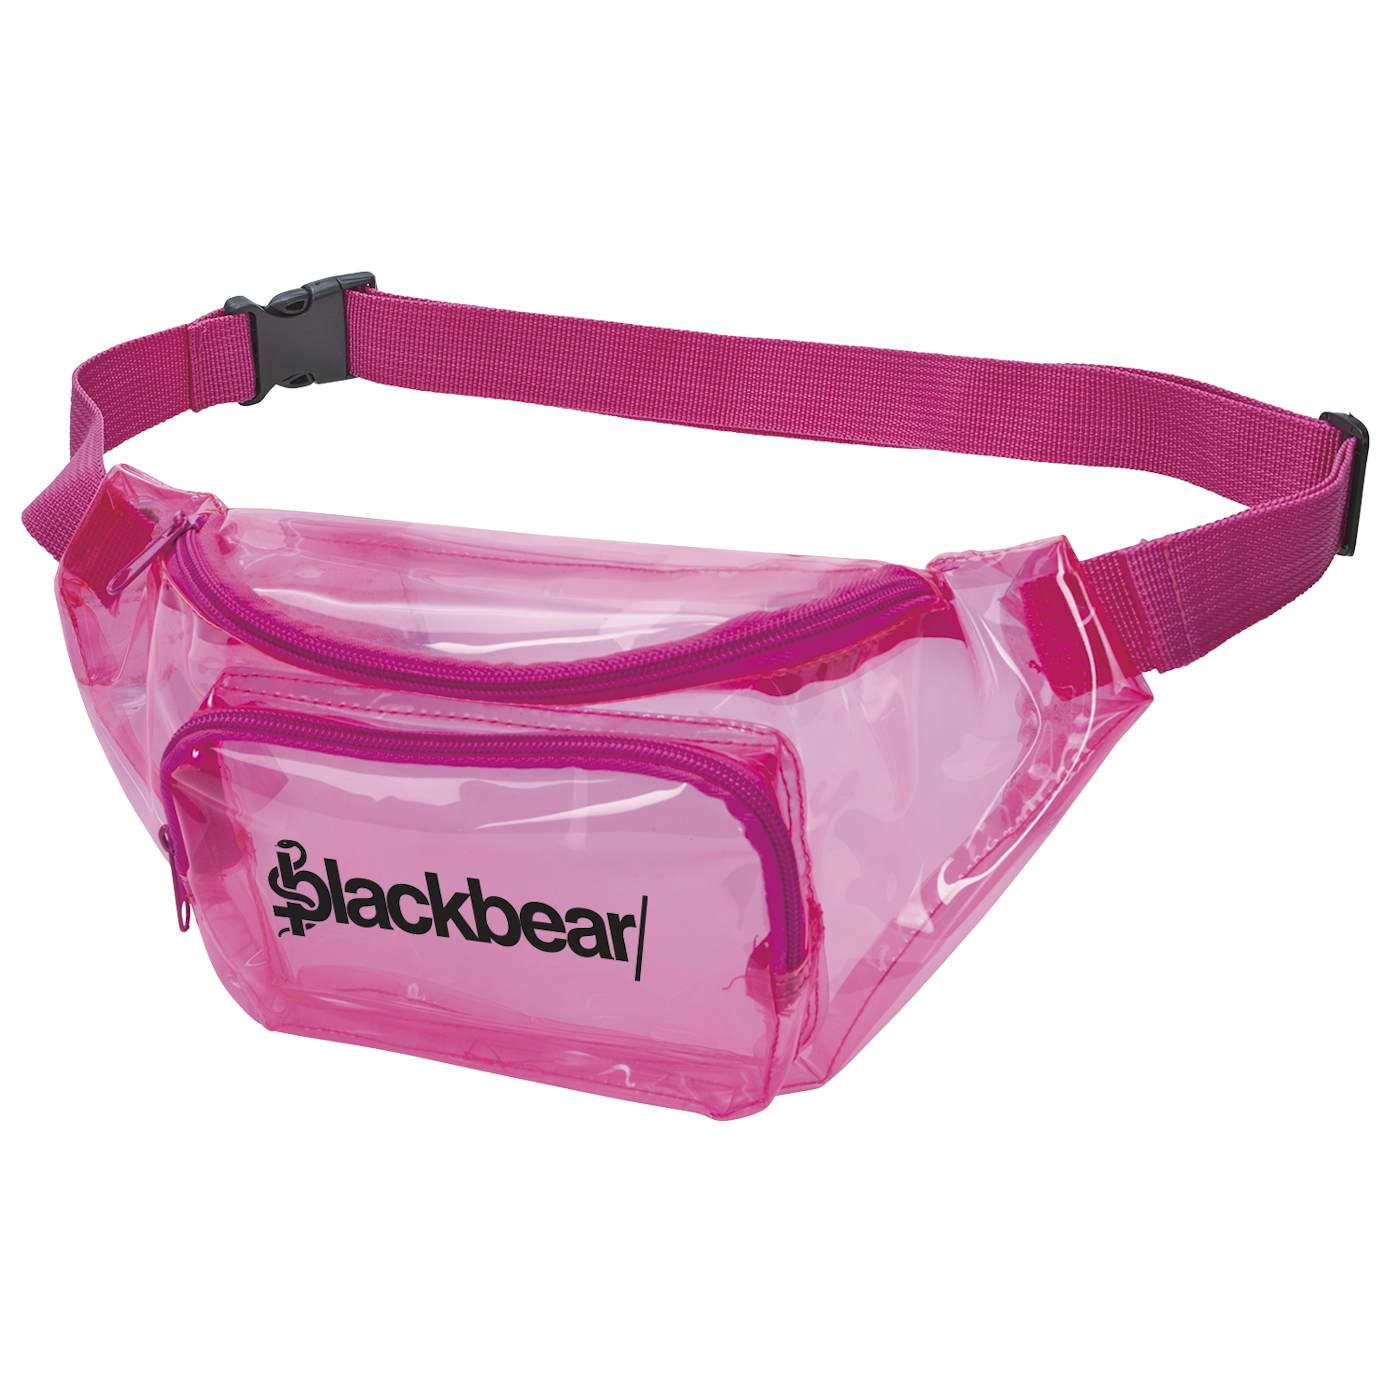 blackbear translucent pink fanny pack